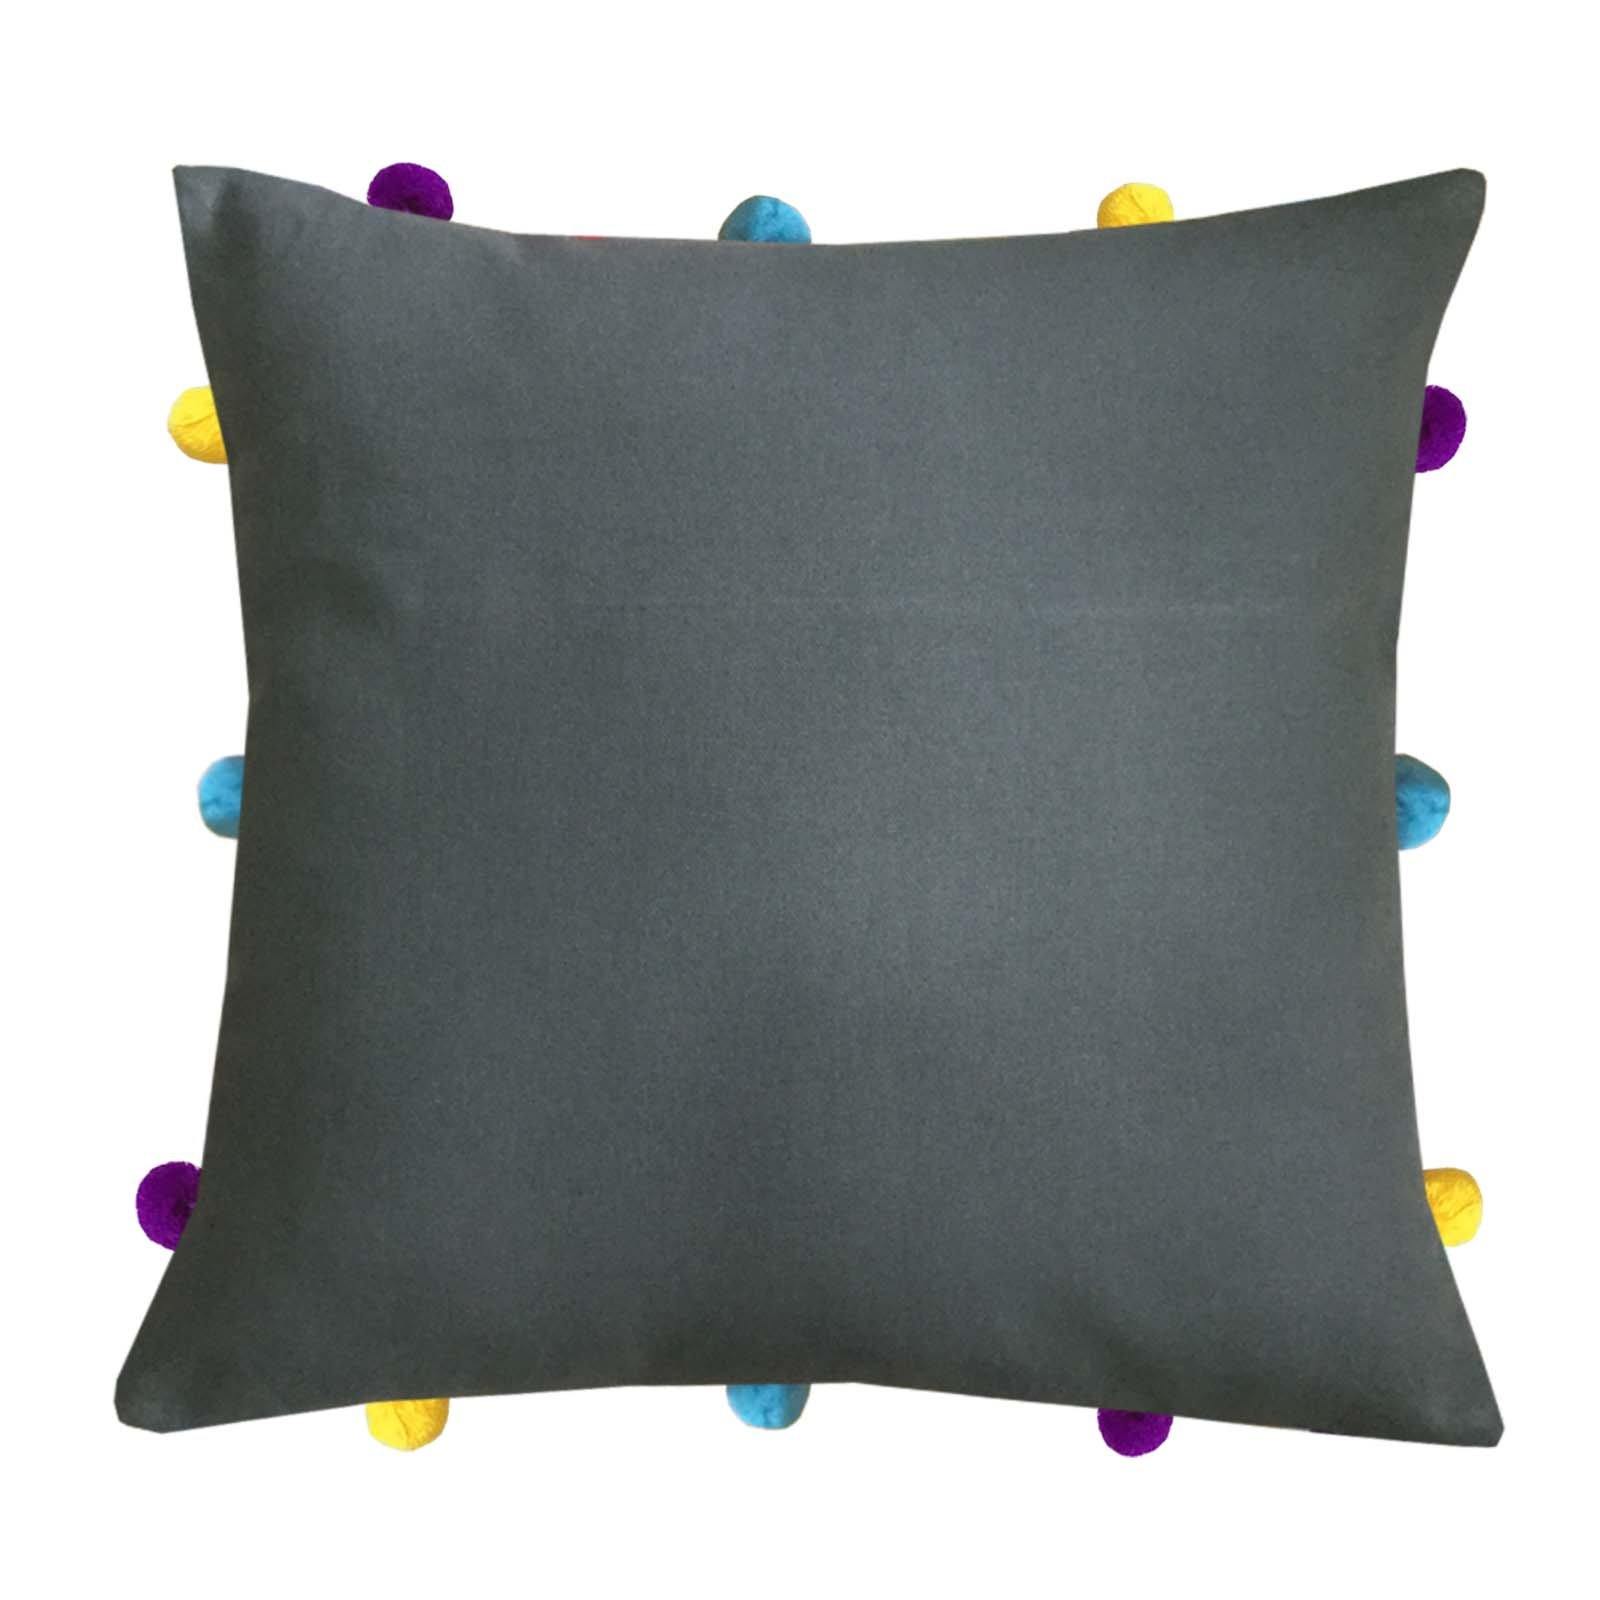 Lushomes Sedona Sage Cushion Cover with Colorful pom poms (Single pc, 12 x 12”) - Lushomes